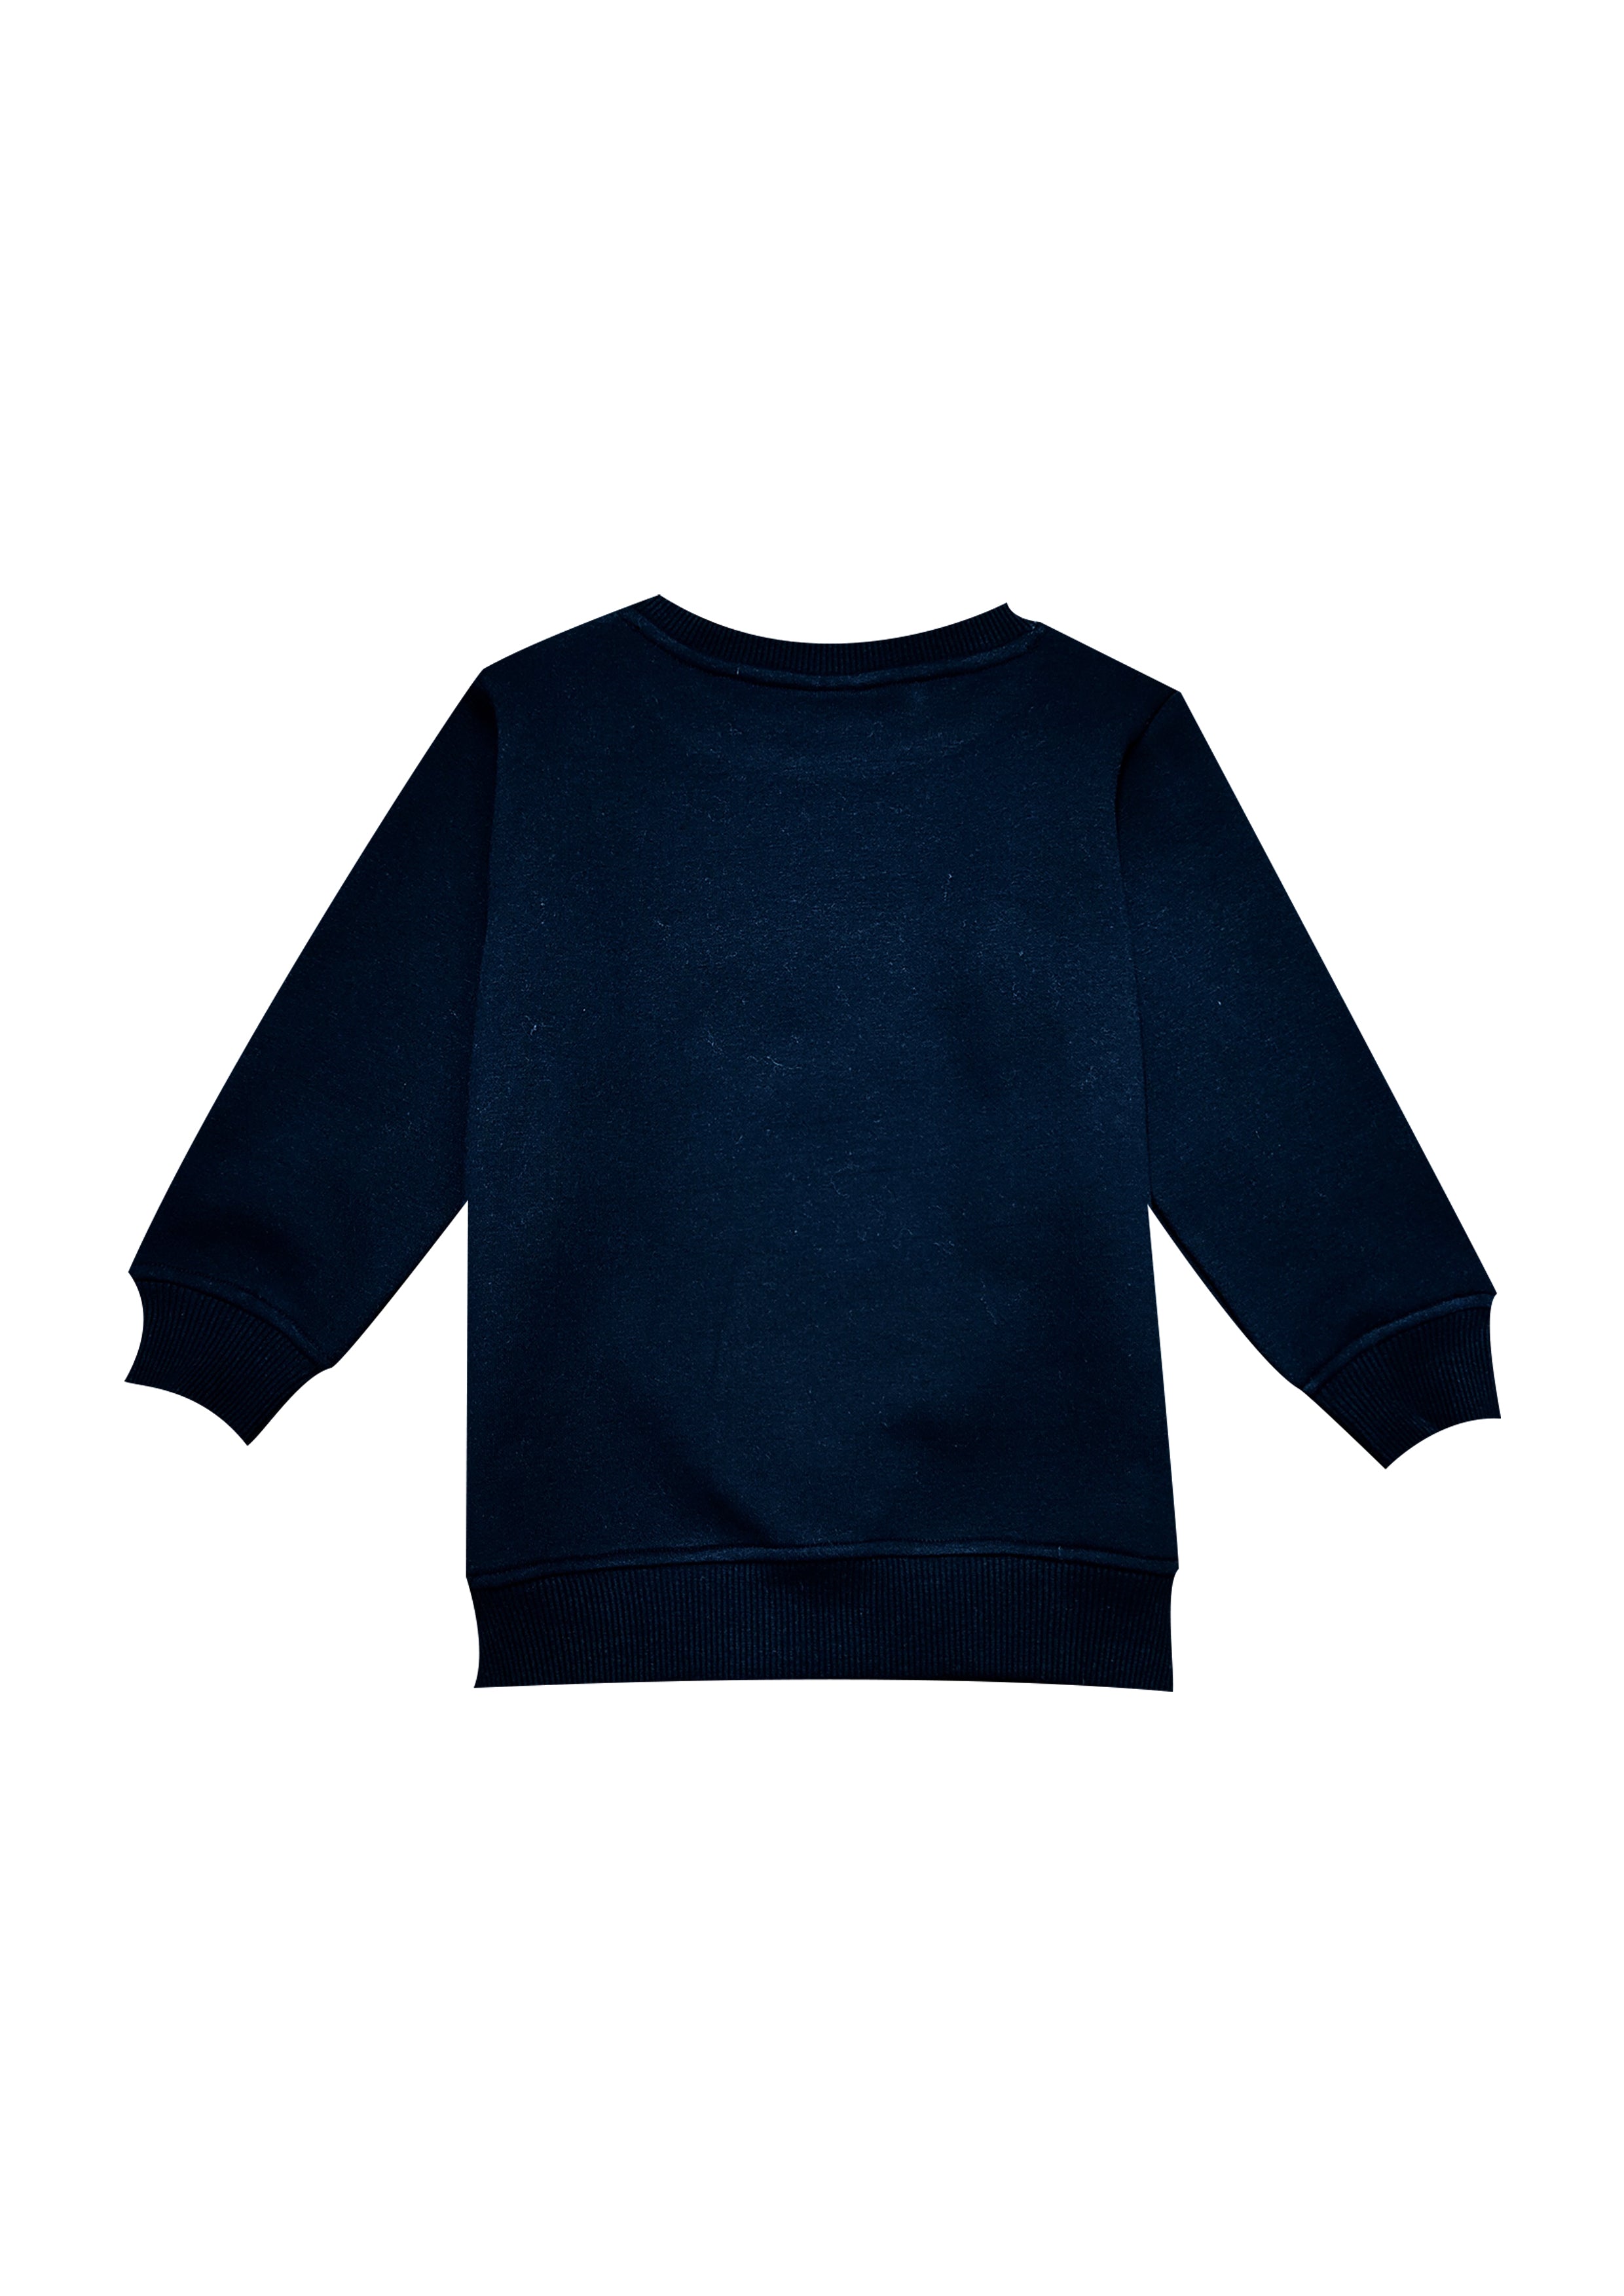 Paw Patrol Logo Print Cotton Fleece Kids Sweatshirt Set - Shopbloom